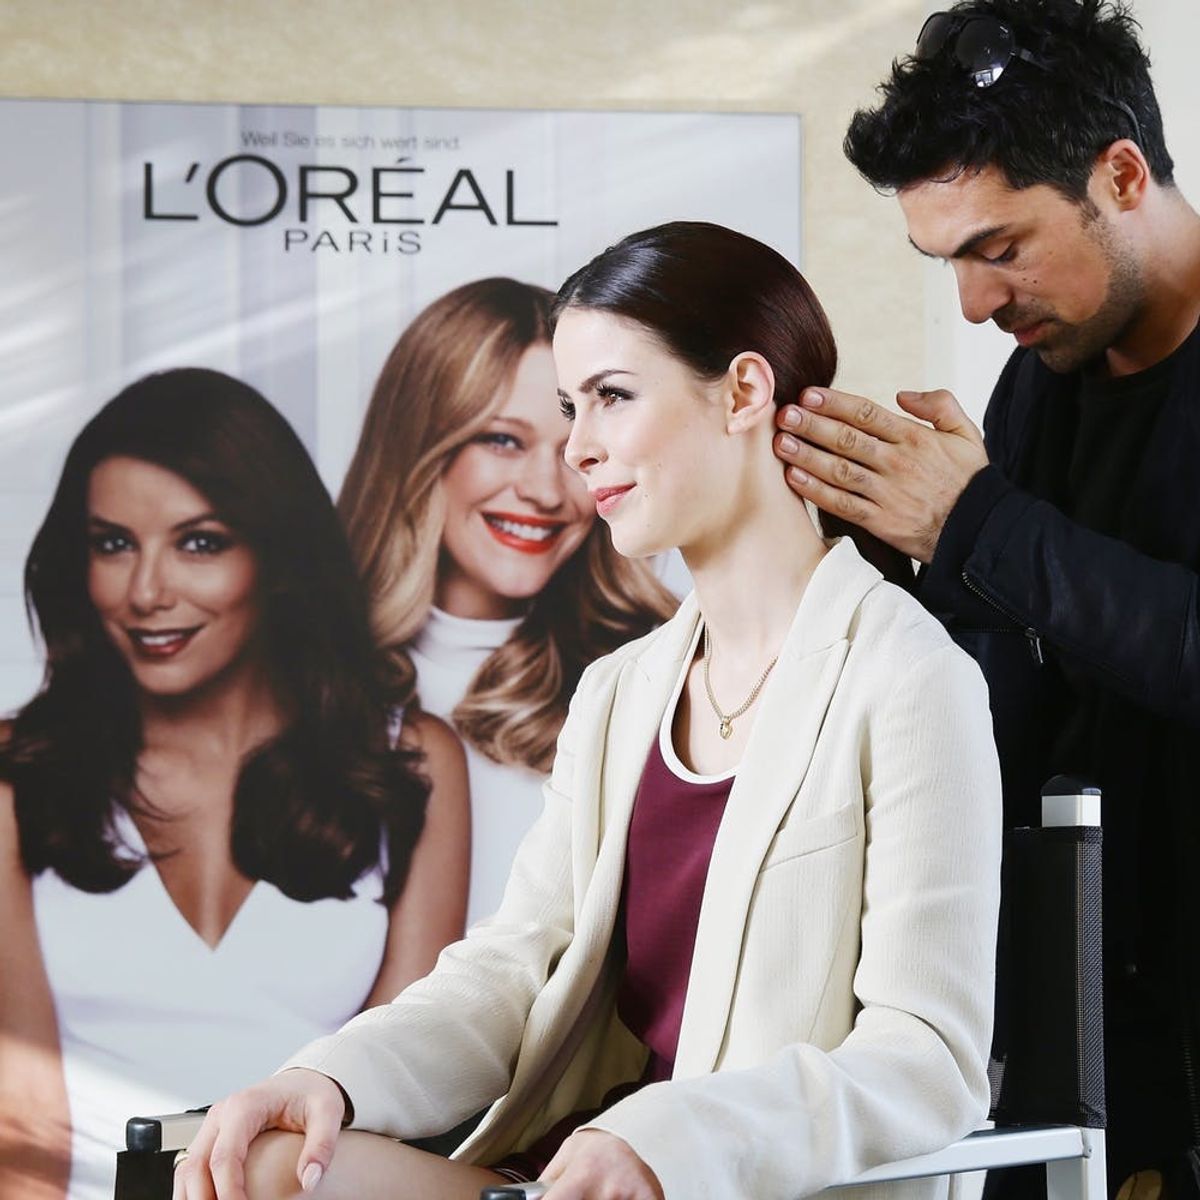 L’Oréal Paris Is Facing MAJOR Backlash Over a Non-Diverse Beauty Ad